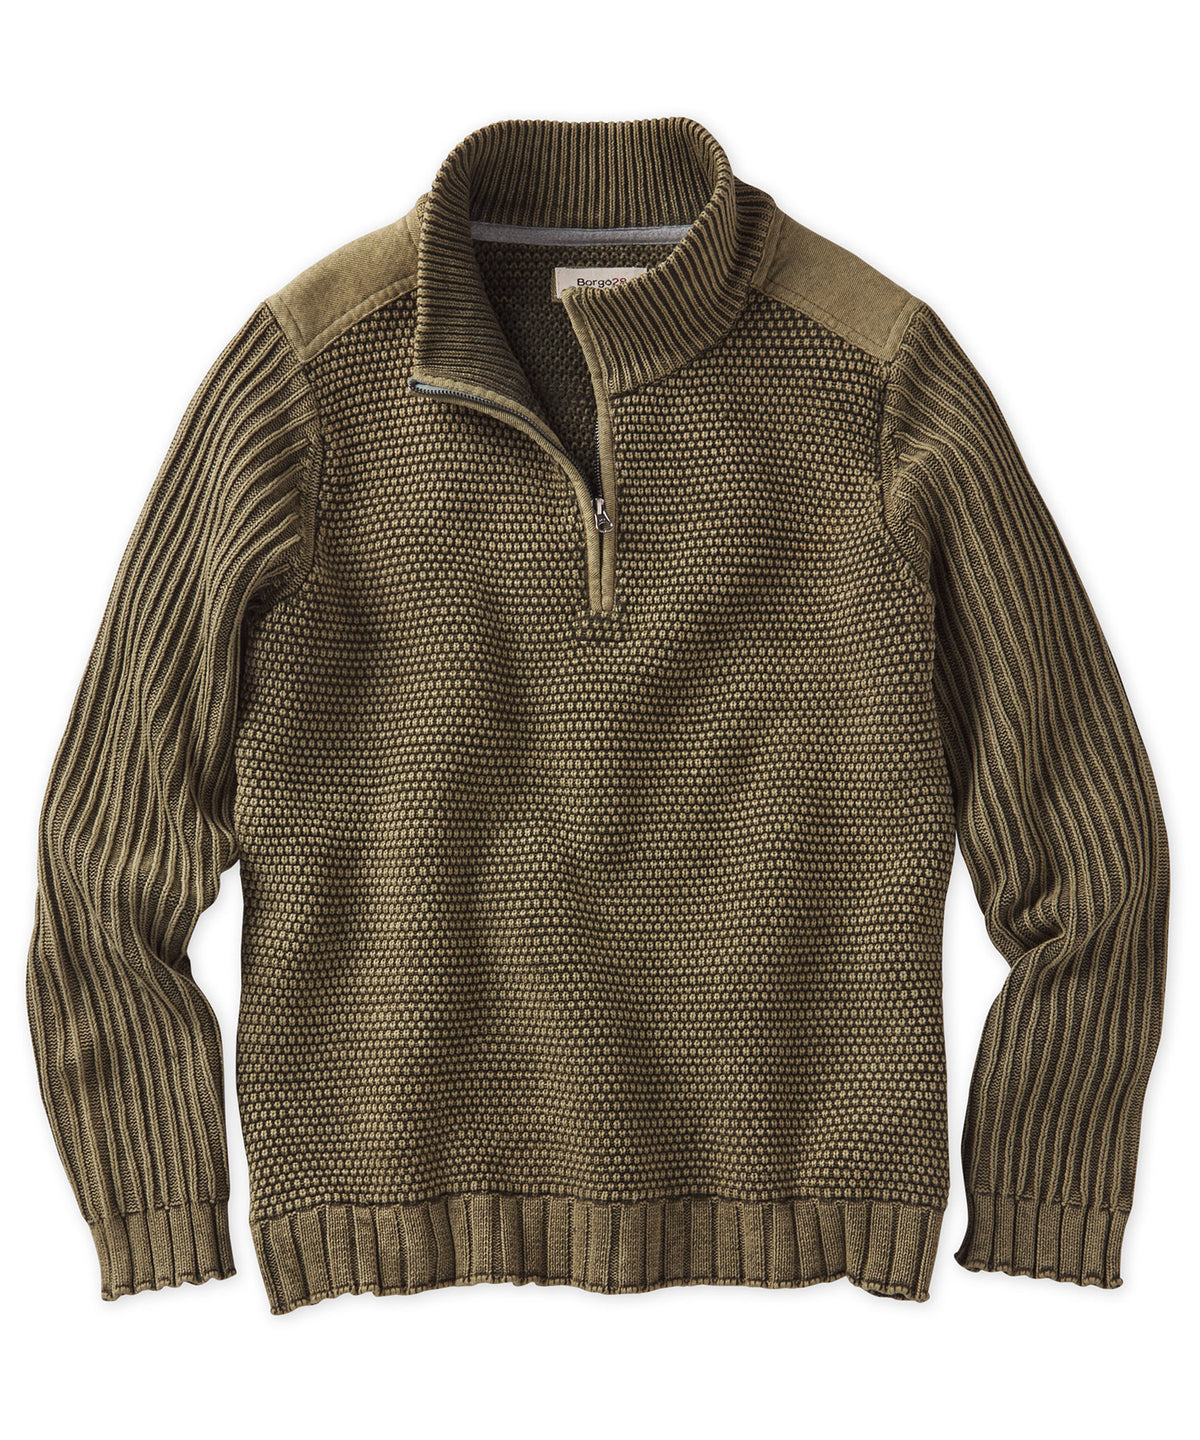 Quarter-Zip Stone Washed Sweater